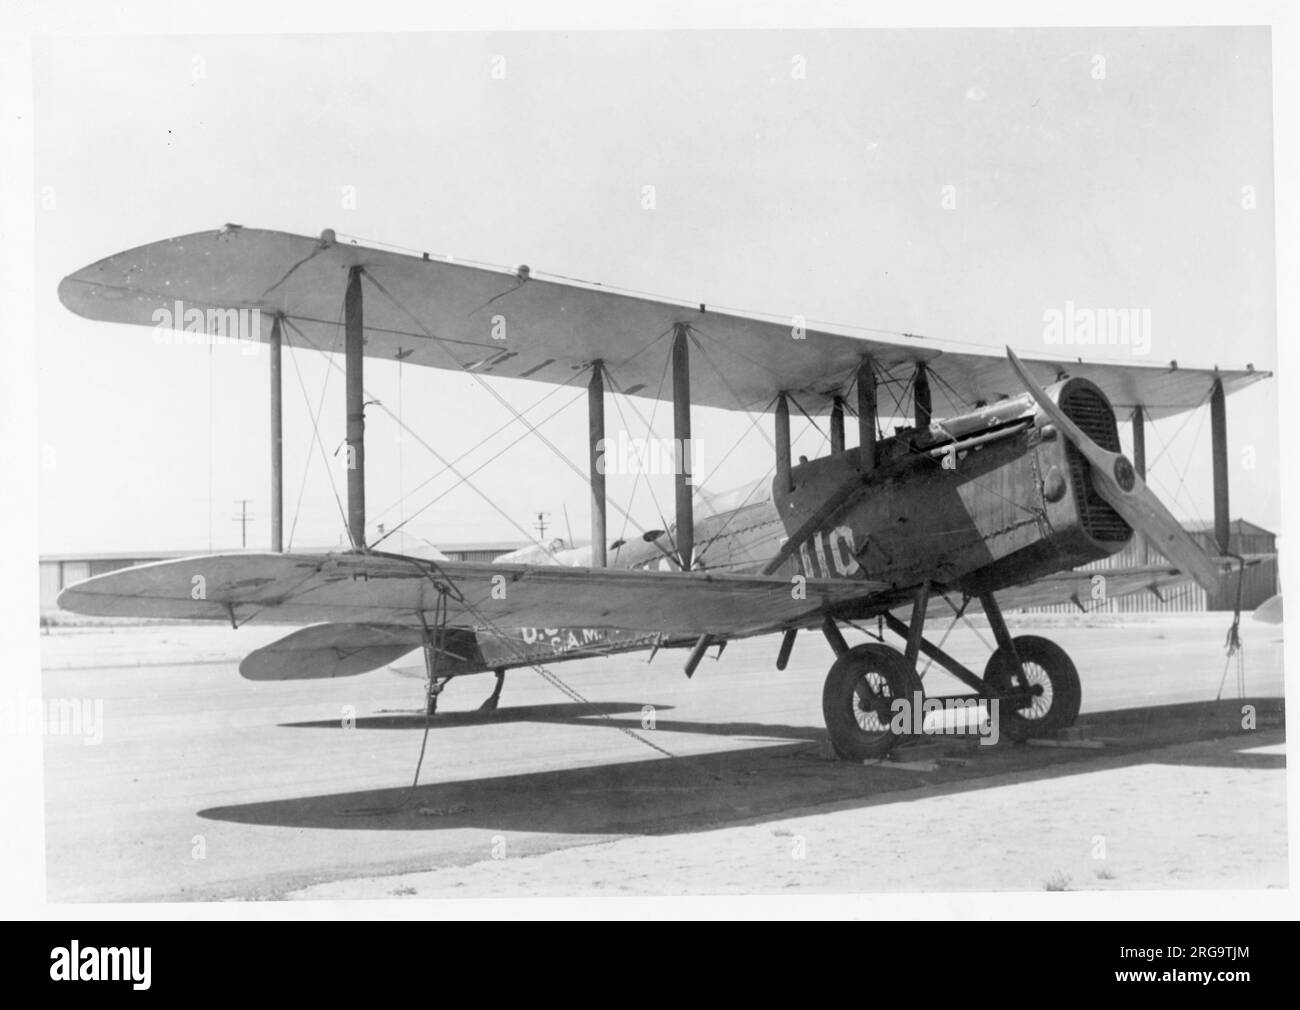 Dayton wright aircraft Black and White Stock Photos & Images - Alamy